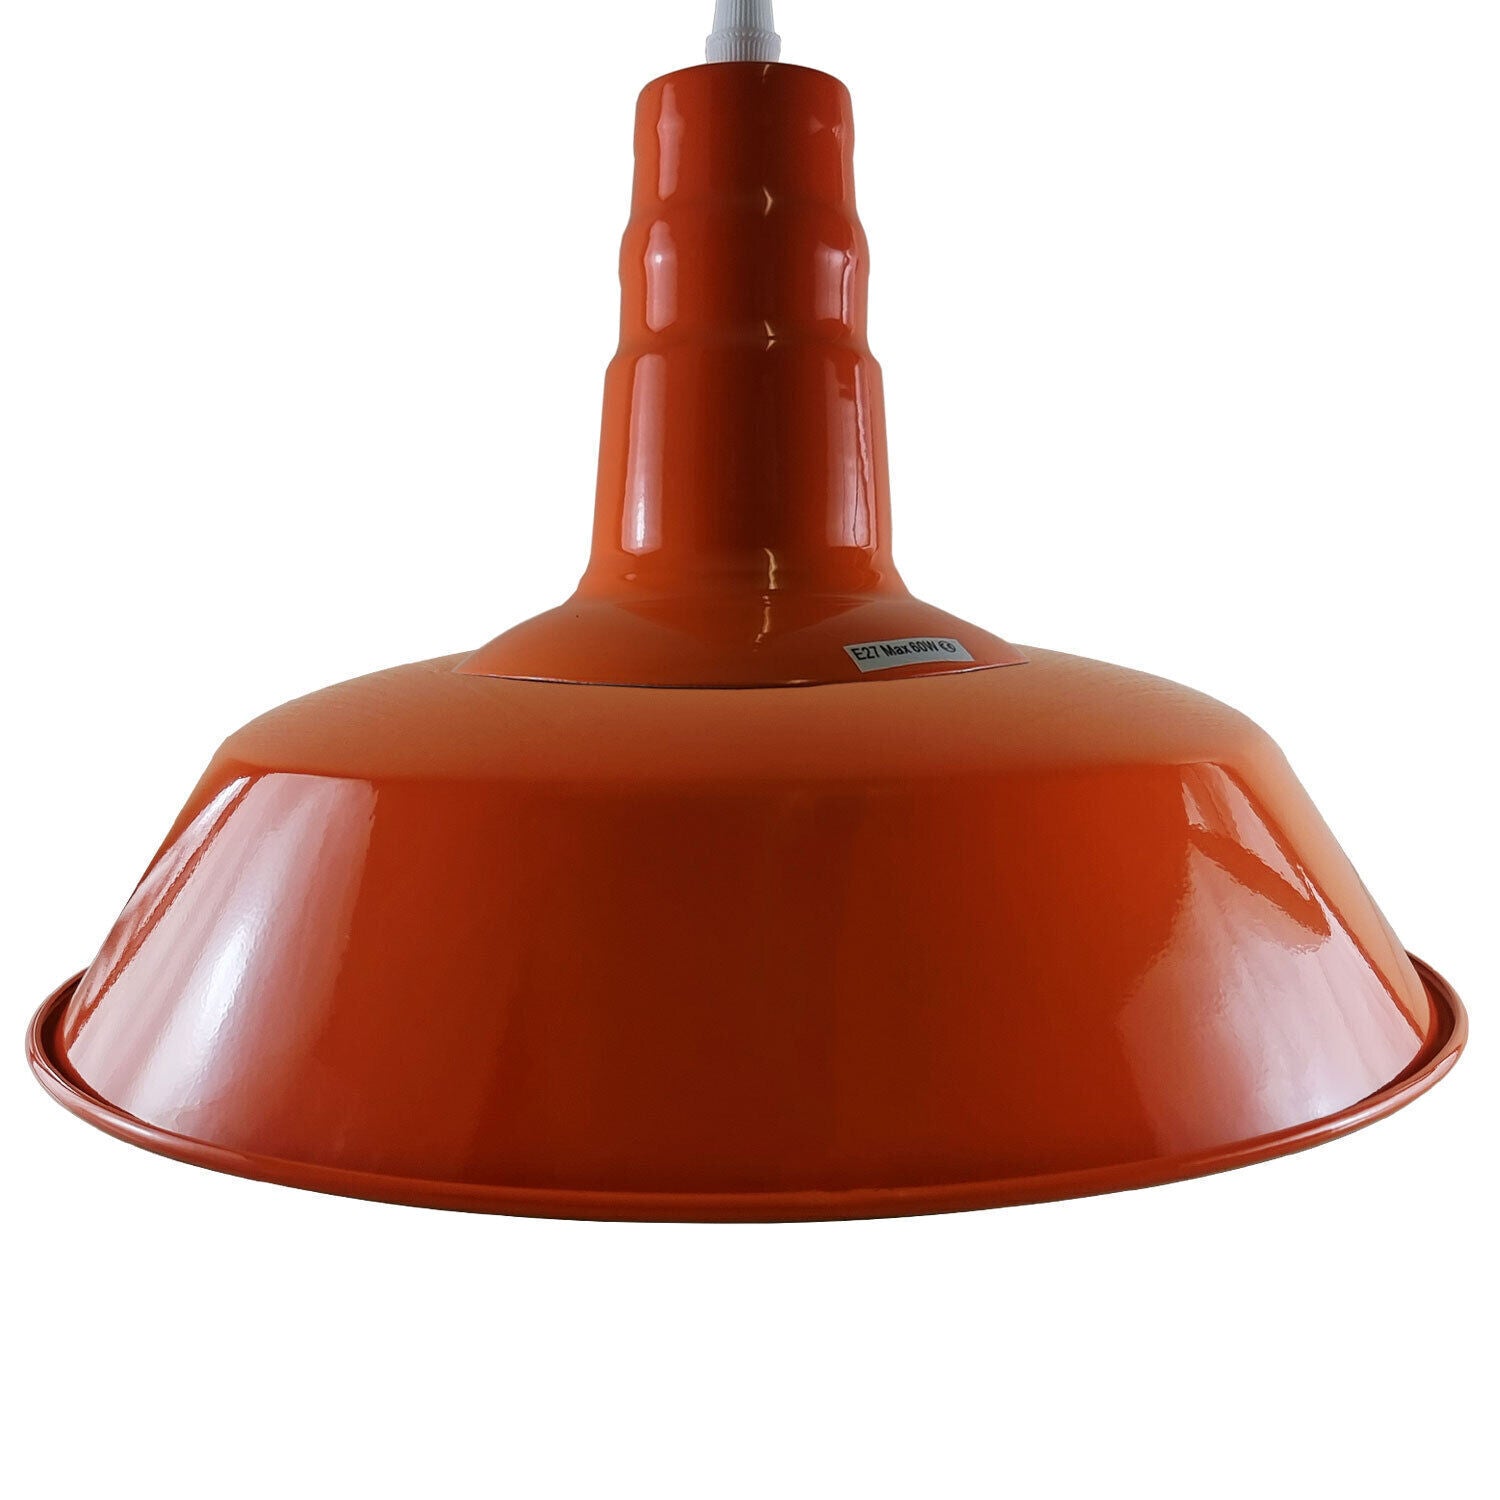 Modern Hanging pendant Ceiling Lamp, Metal Light Shade Lighting UK E27 Edison base Decorate Height Adjustable Pendant Light for Bar, Restaurant , Home and Kitchen